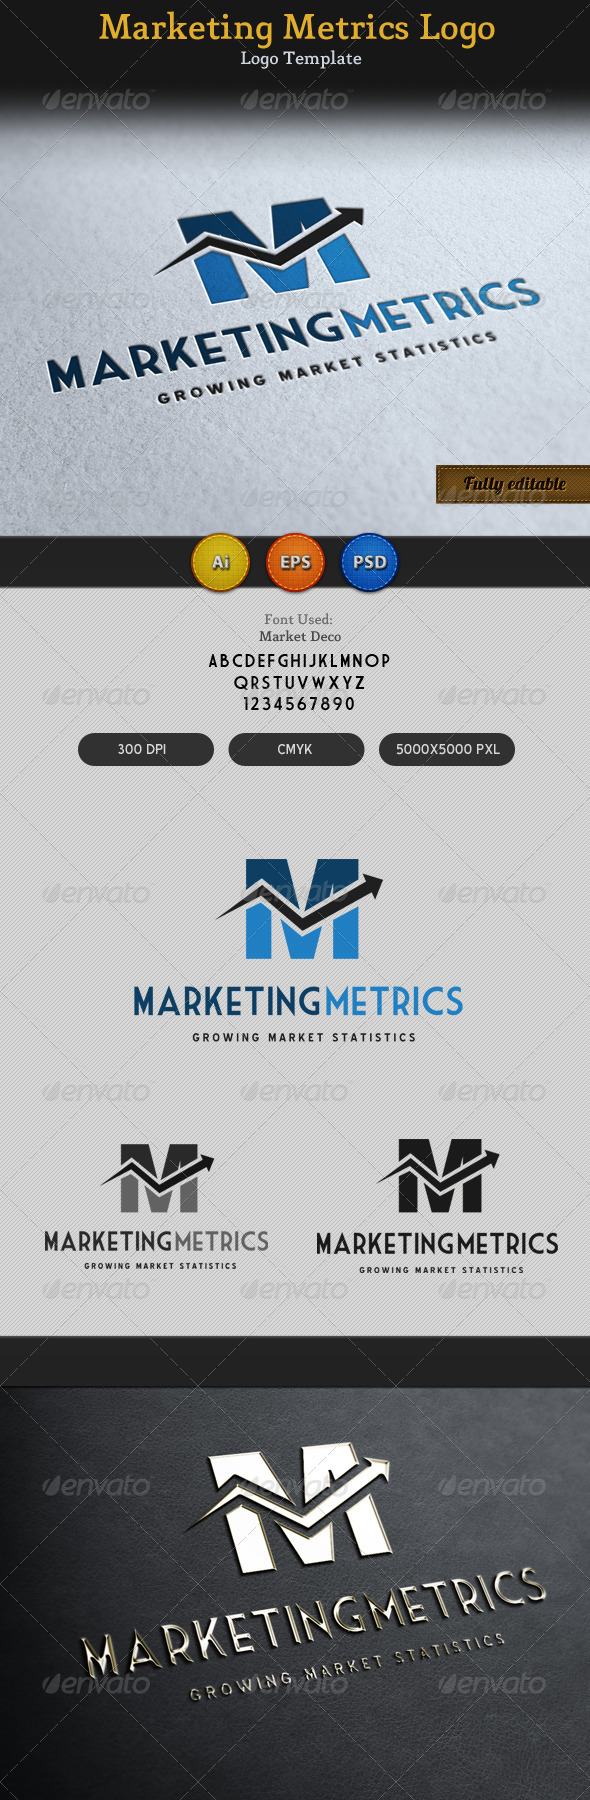 Marketing Metrics Logo 2